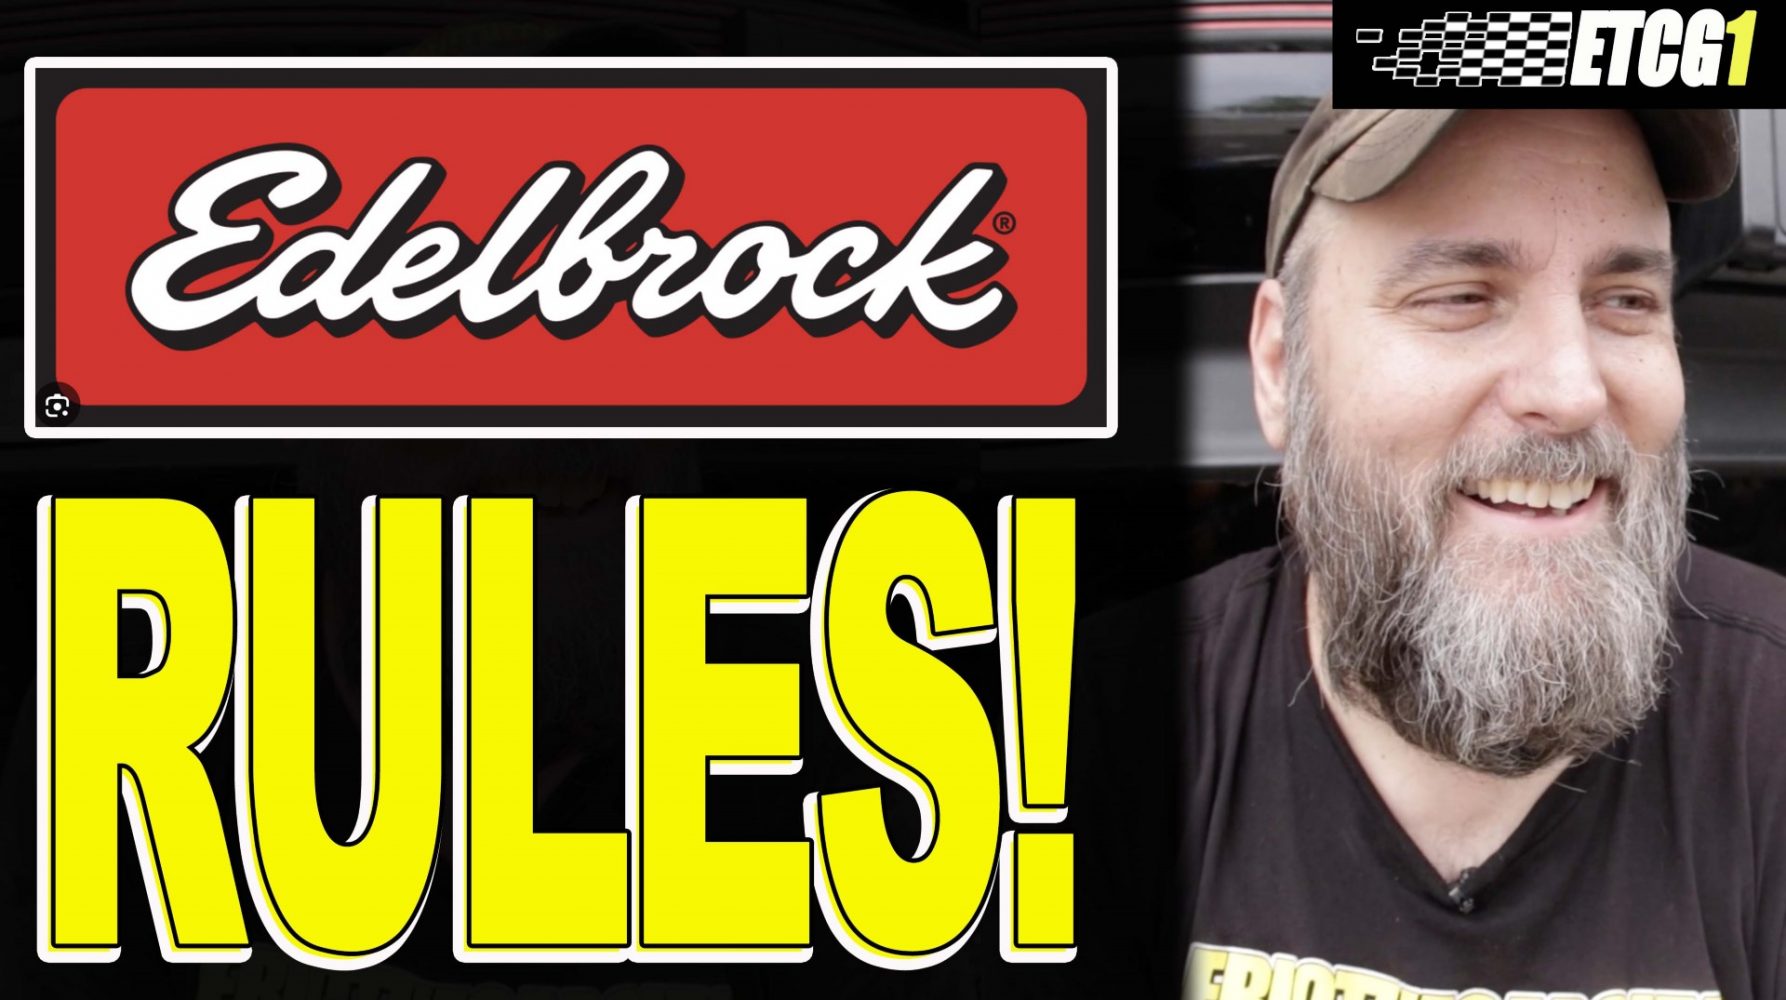 Edelbrock Rules! | EricTheCarGuy